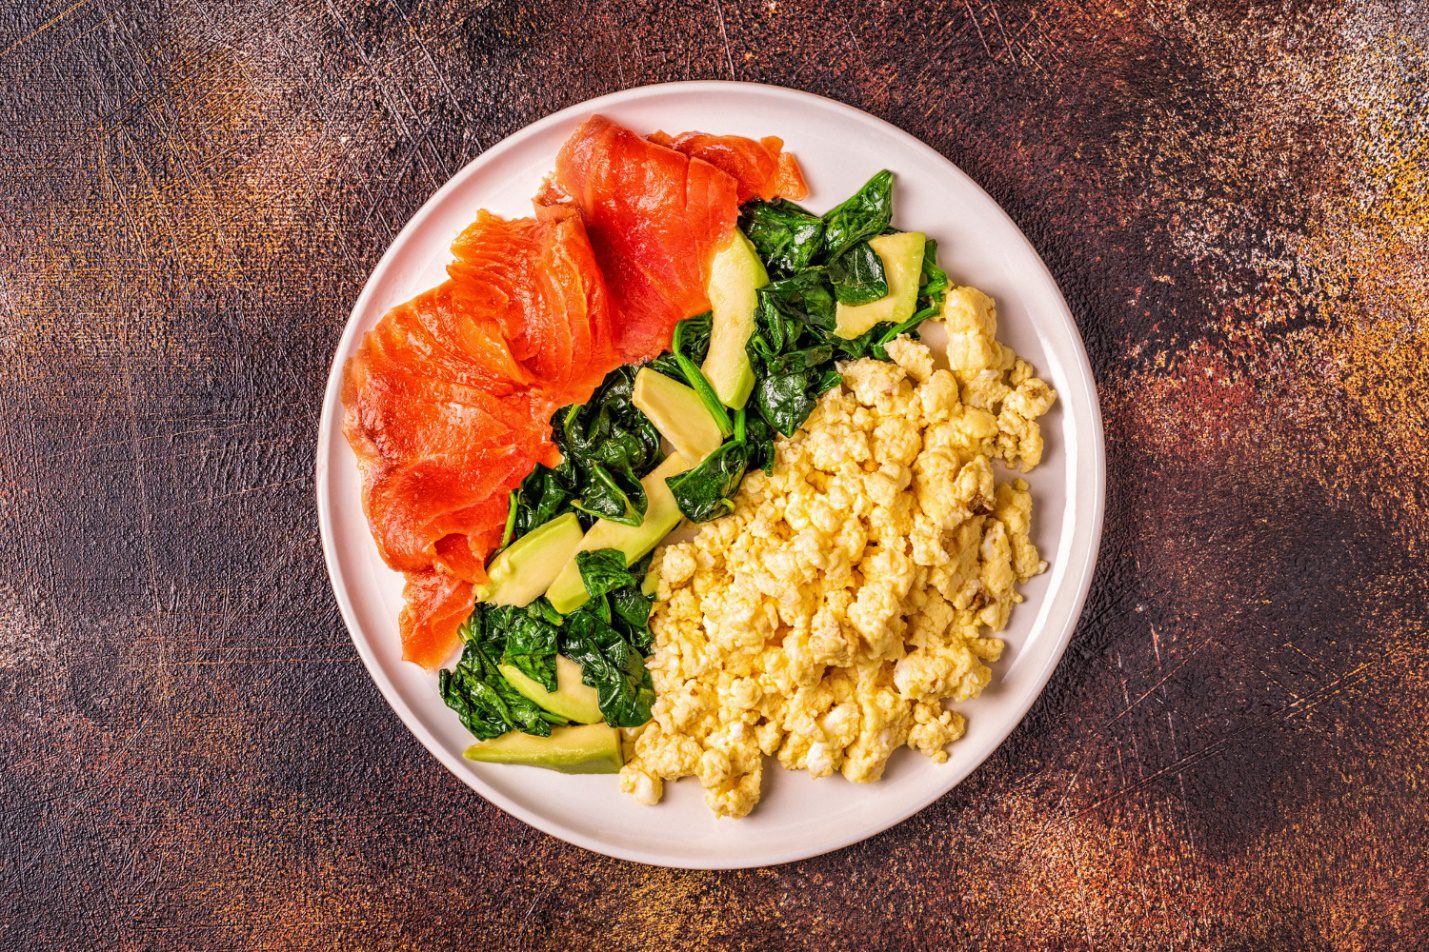 C:\Users\Dell\Downloads\ketogenic-diet-breakfast-scrambled-eggs-salmon-avocado-spinach.jpg